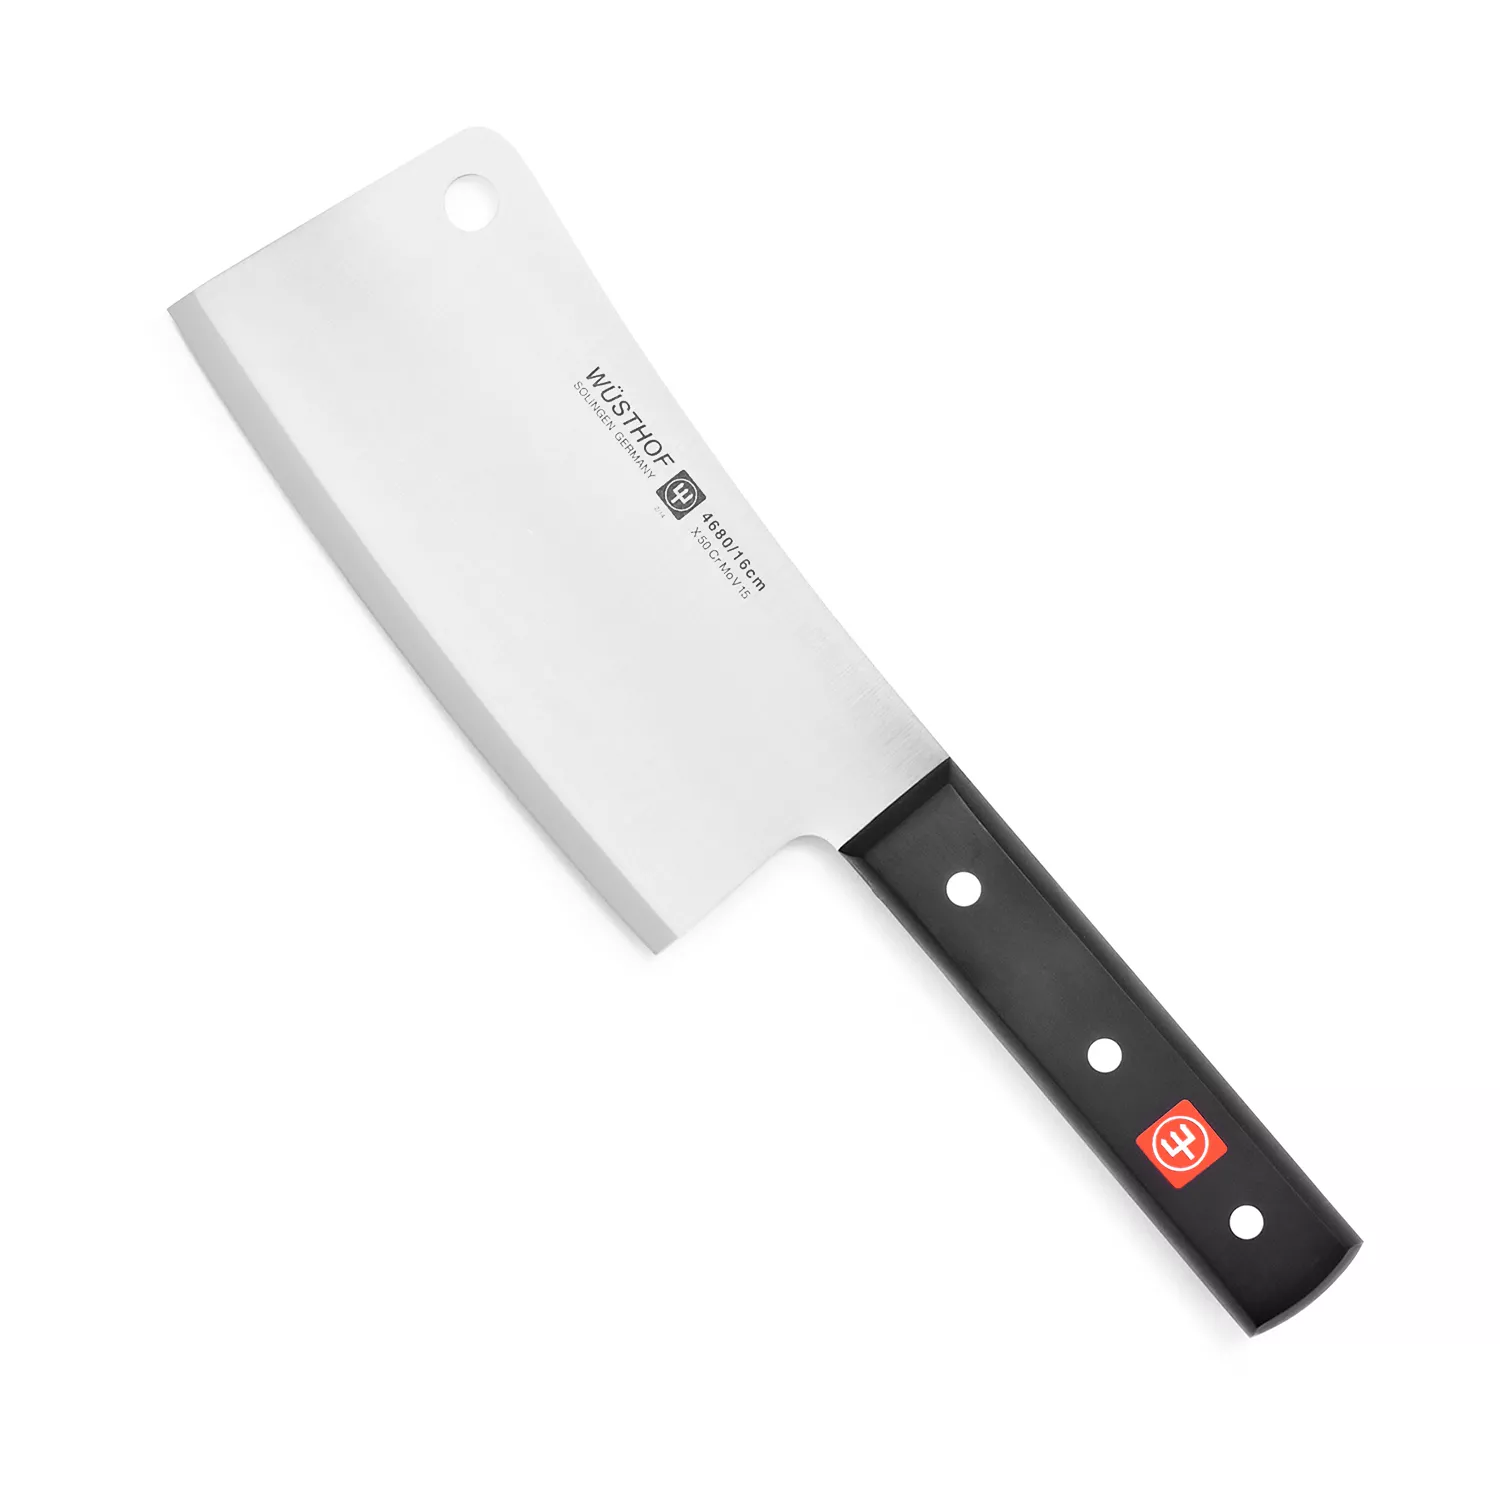 Calphalon Cleaver Kitchen Knife